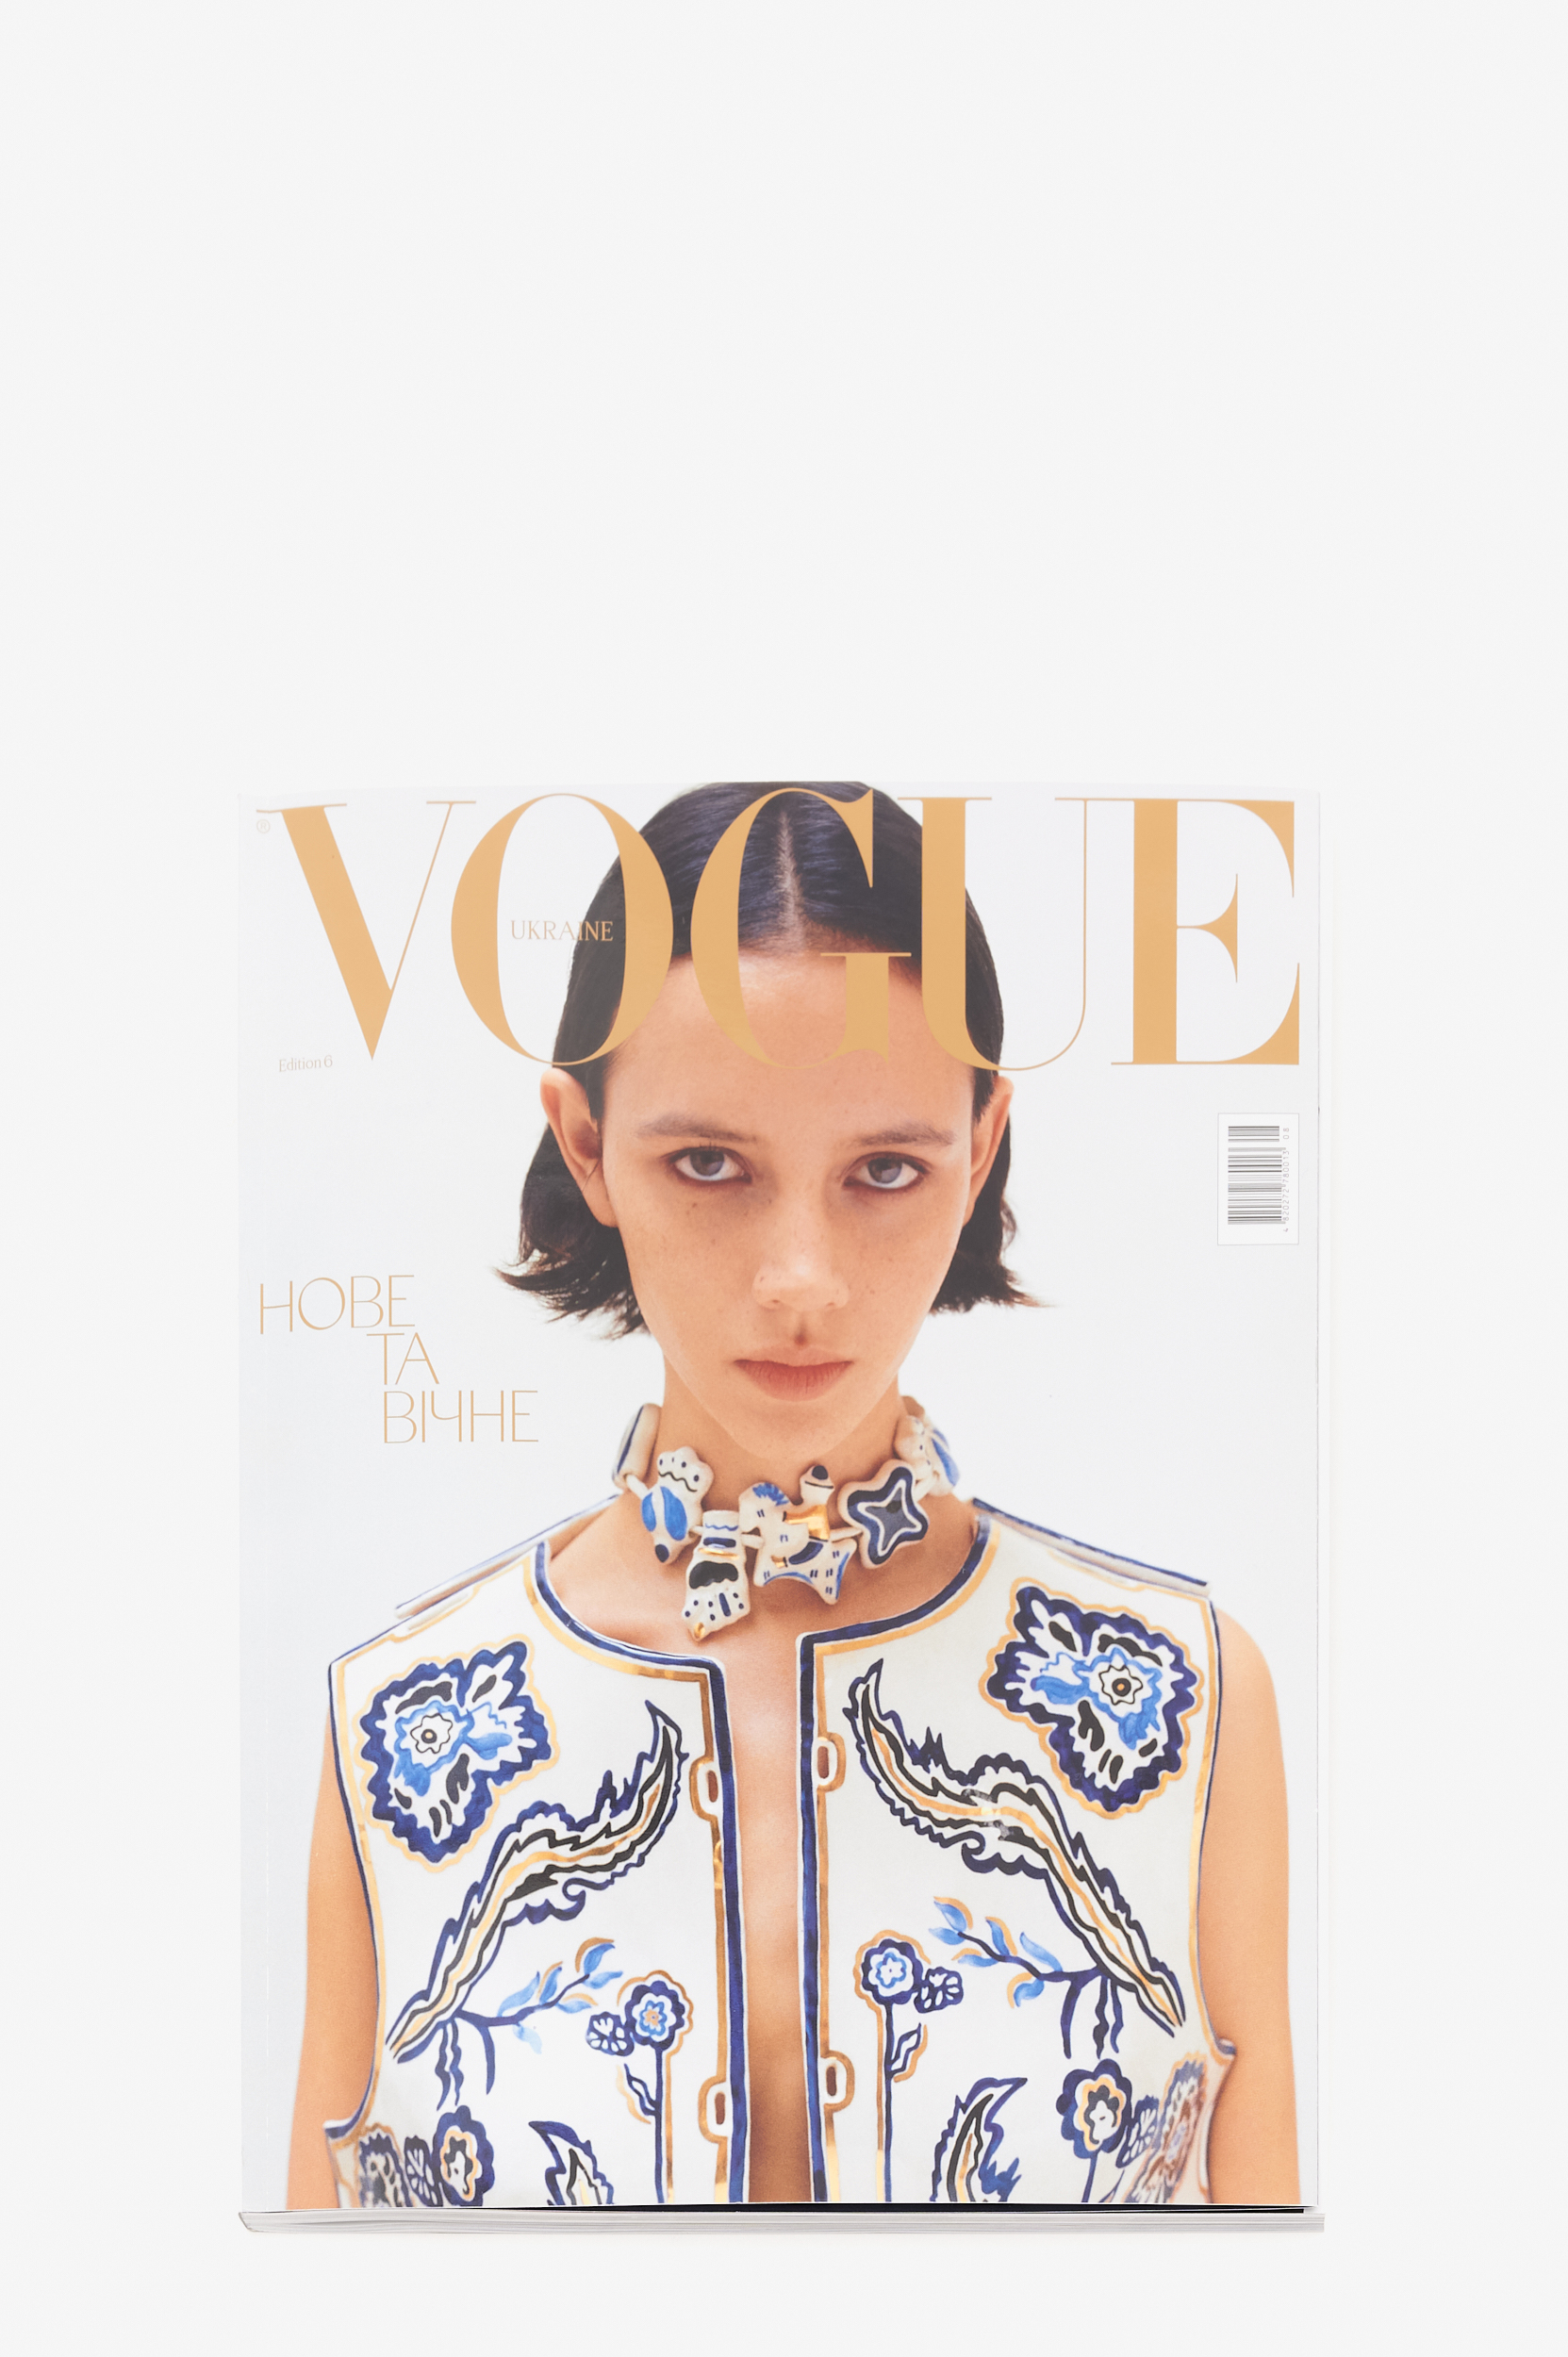 Vogue Журнал